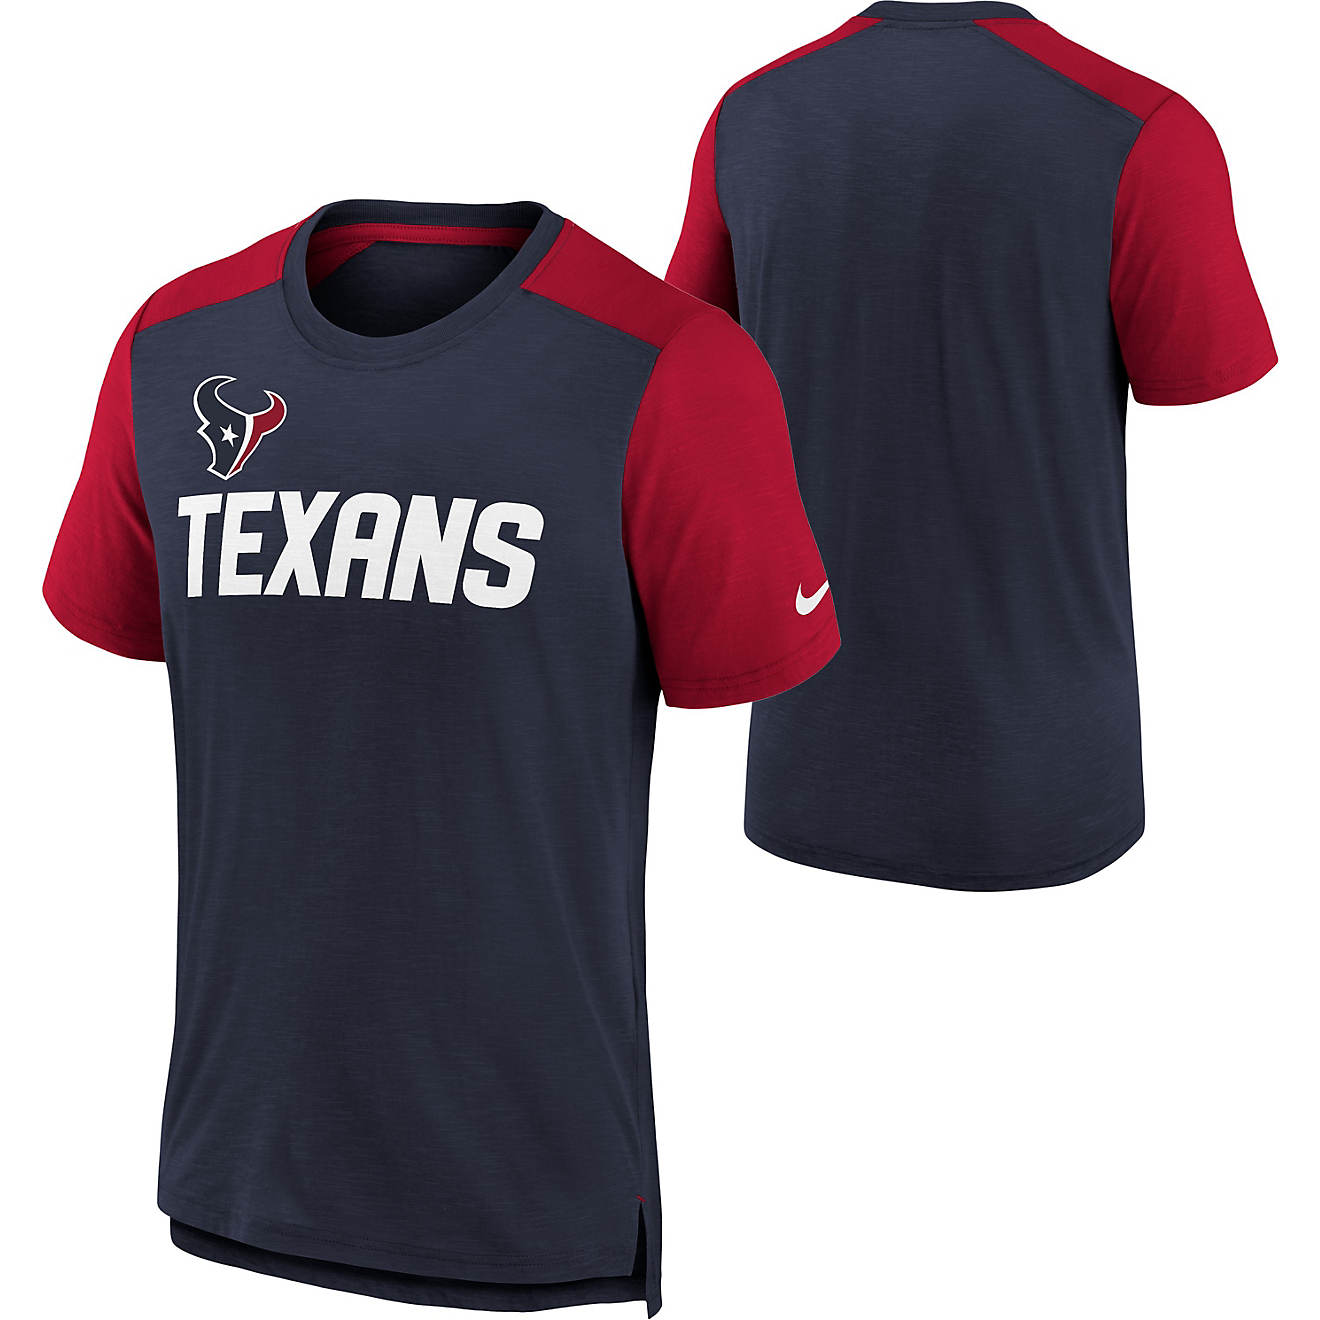 texans shirts academy